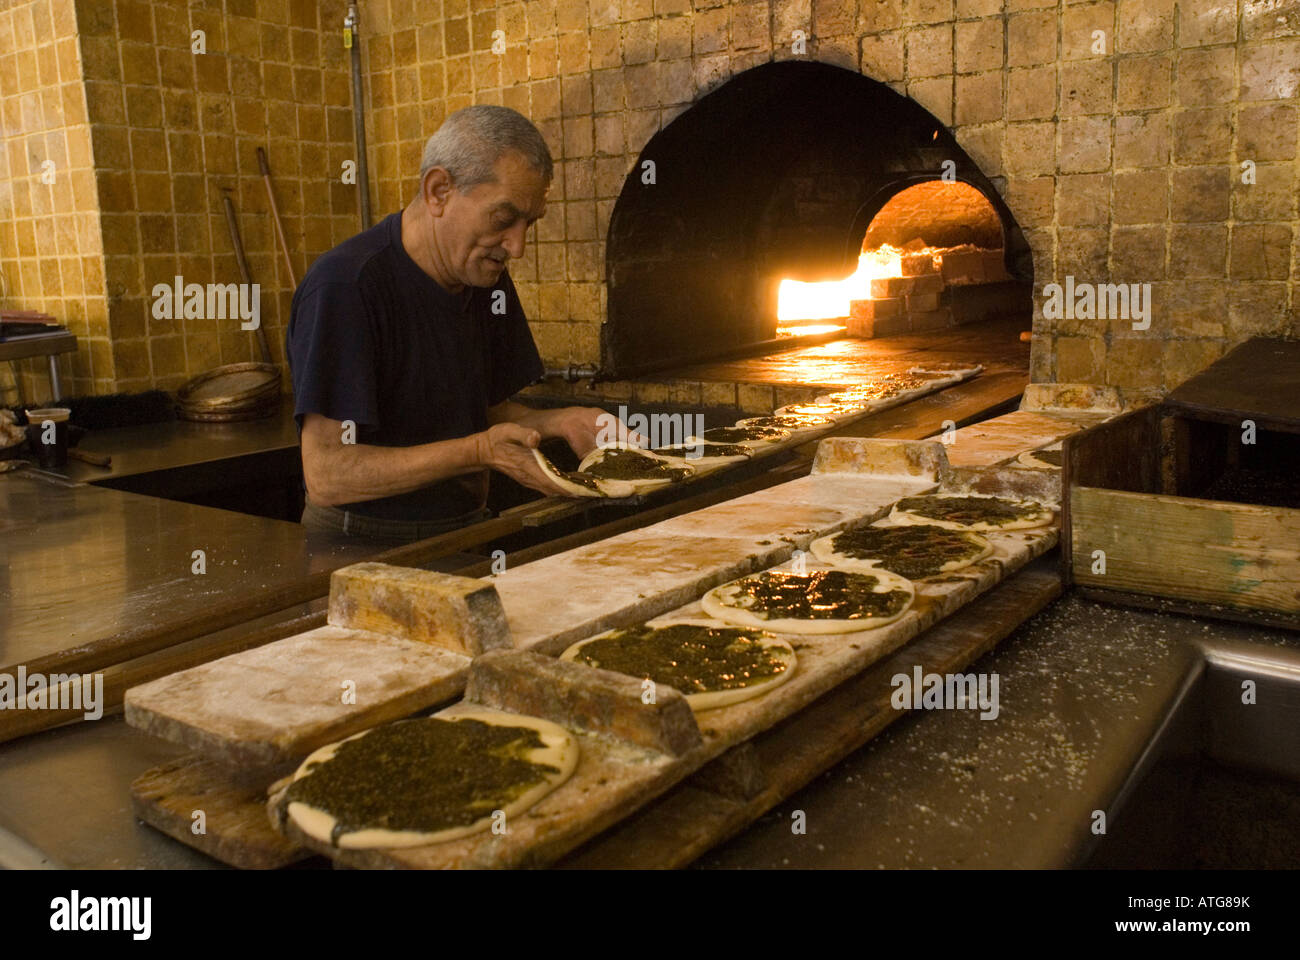 https://c8.alamy.com/comp/ATG89K/an-israeli-arab-man-placing-traditional-manakish-zaatar-bread-inside-ATG89K.jpg